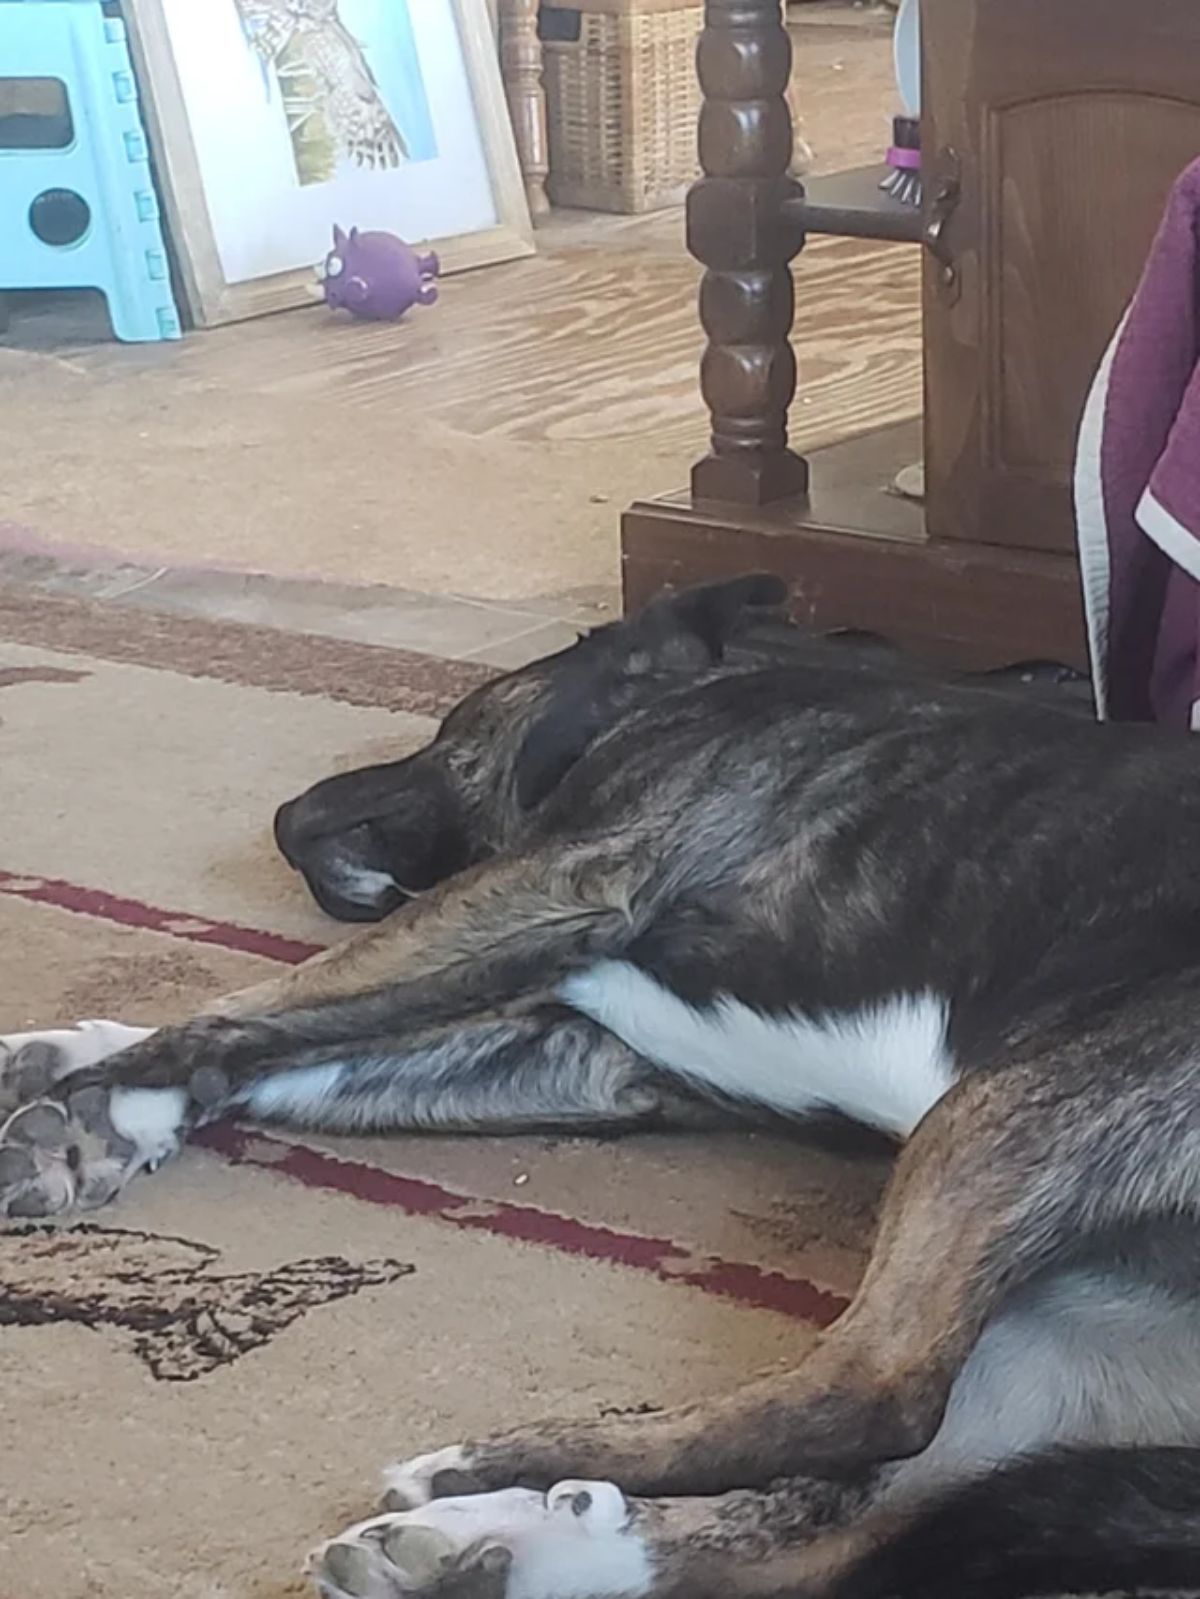 black brown and white dog sleeping sideways on the floor